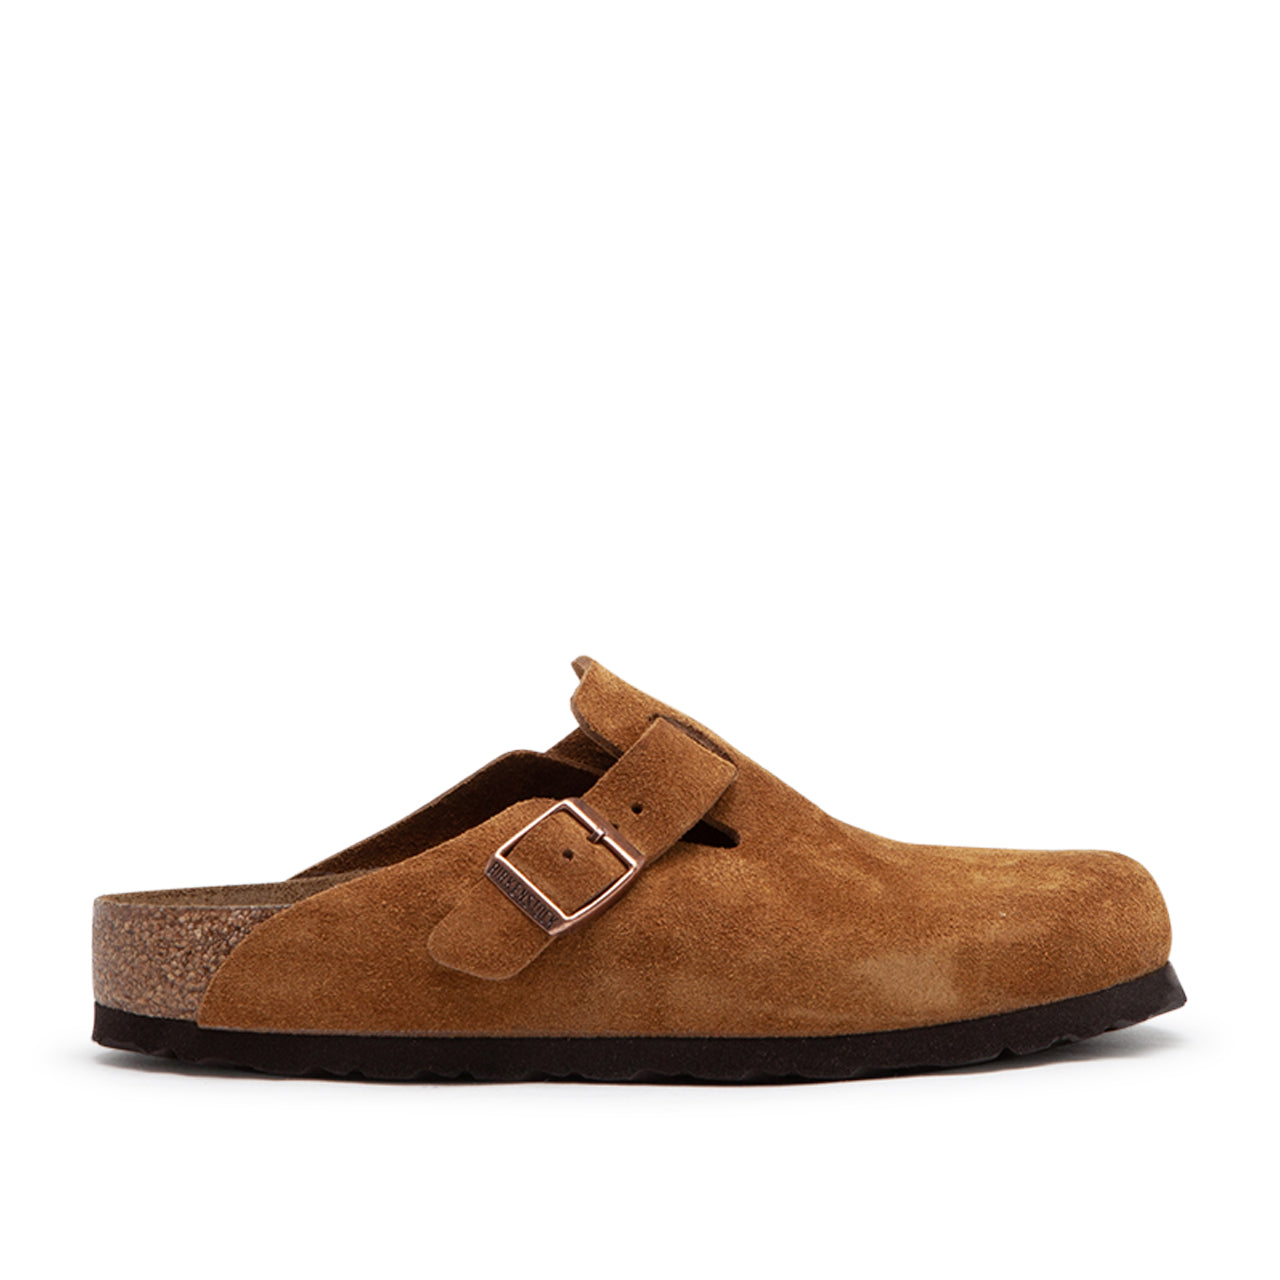 Birkenstock Boston Soft Footbed Suede Leather (Braun)  - Cheap Juzsports Jordan Outlet